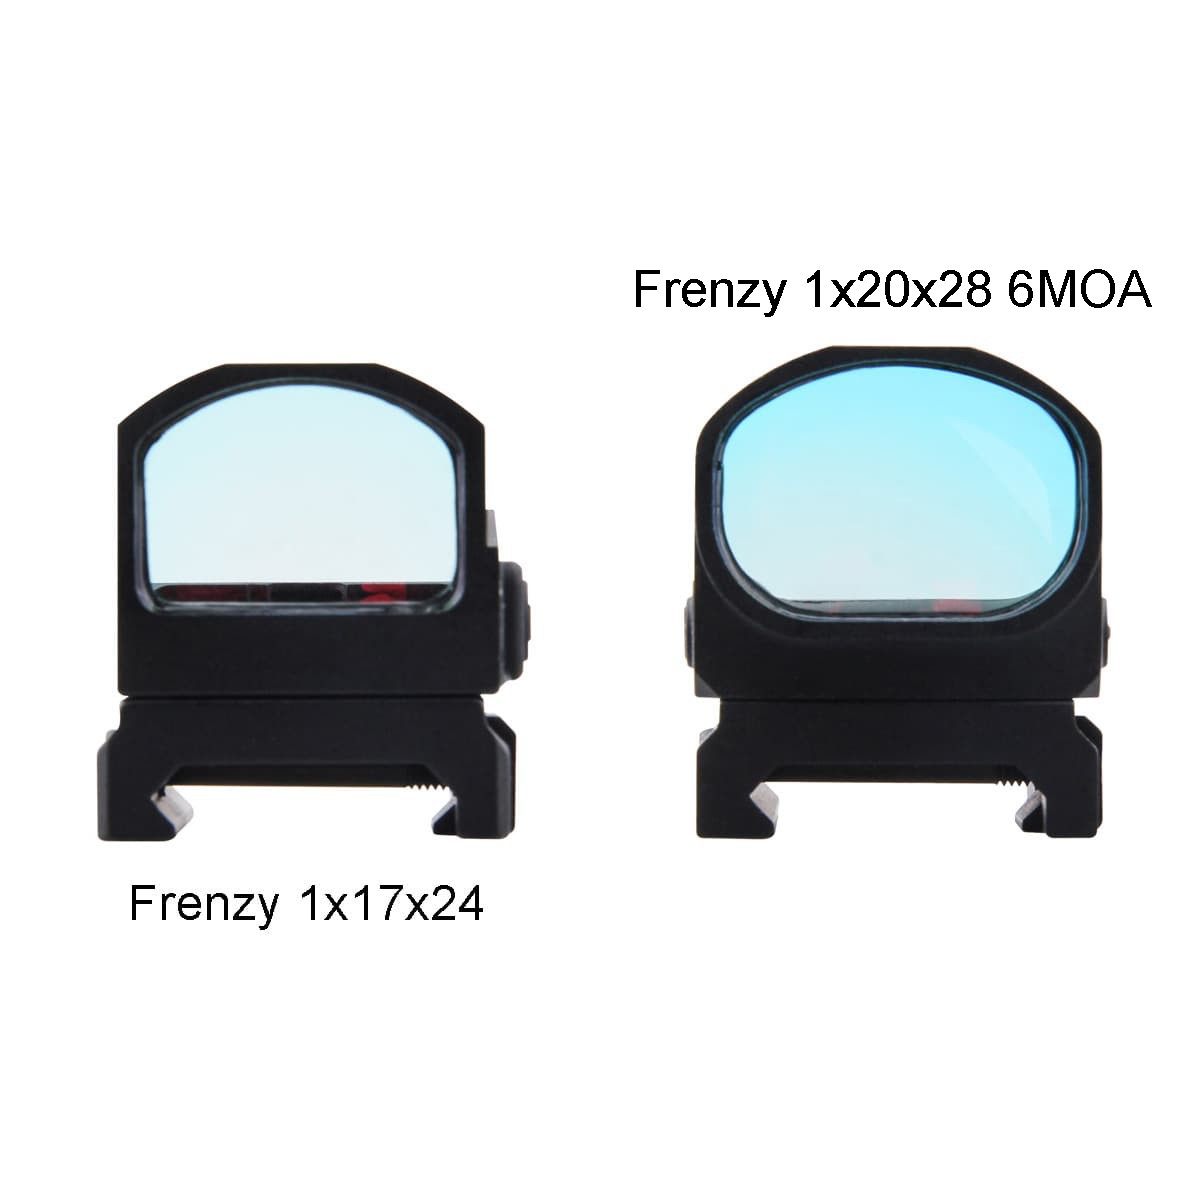 Frenzy 1x20x28 6MOA Red Dot Sight